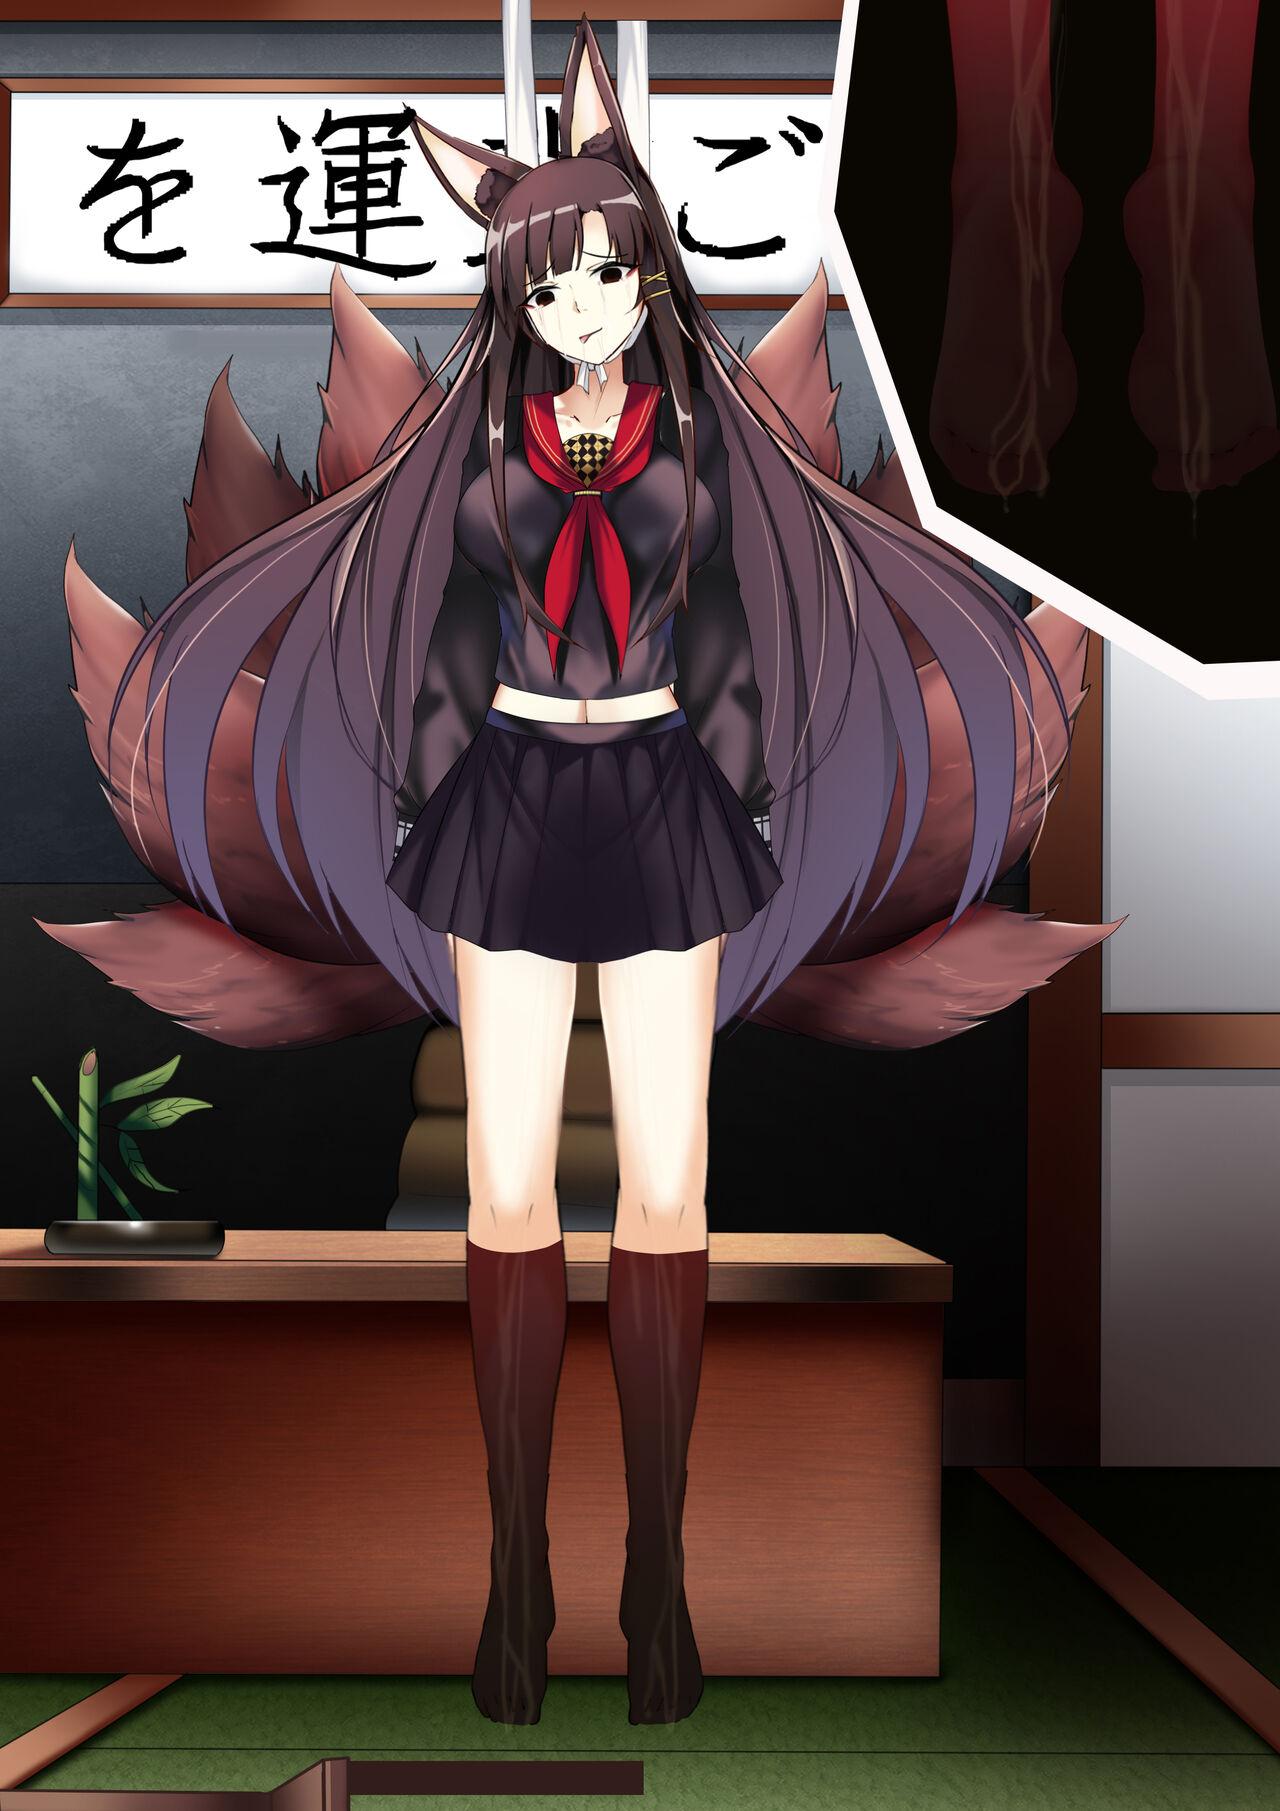 Akagi hanged herself in her office 123